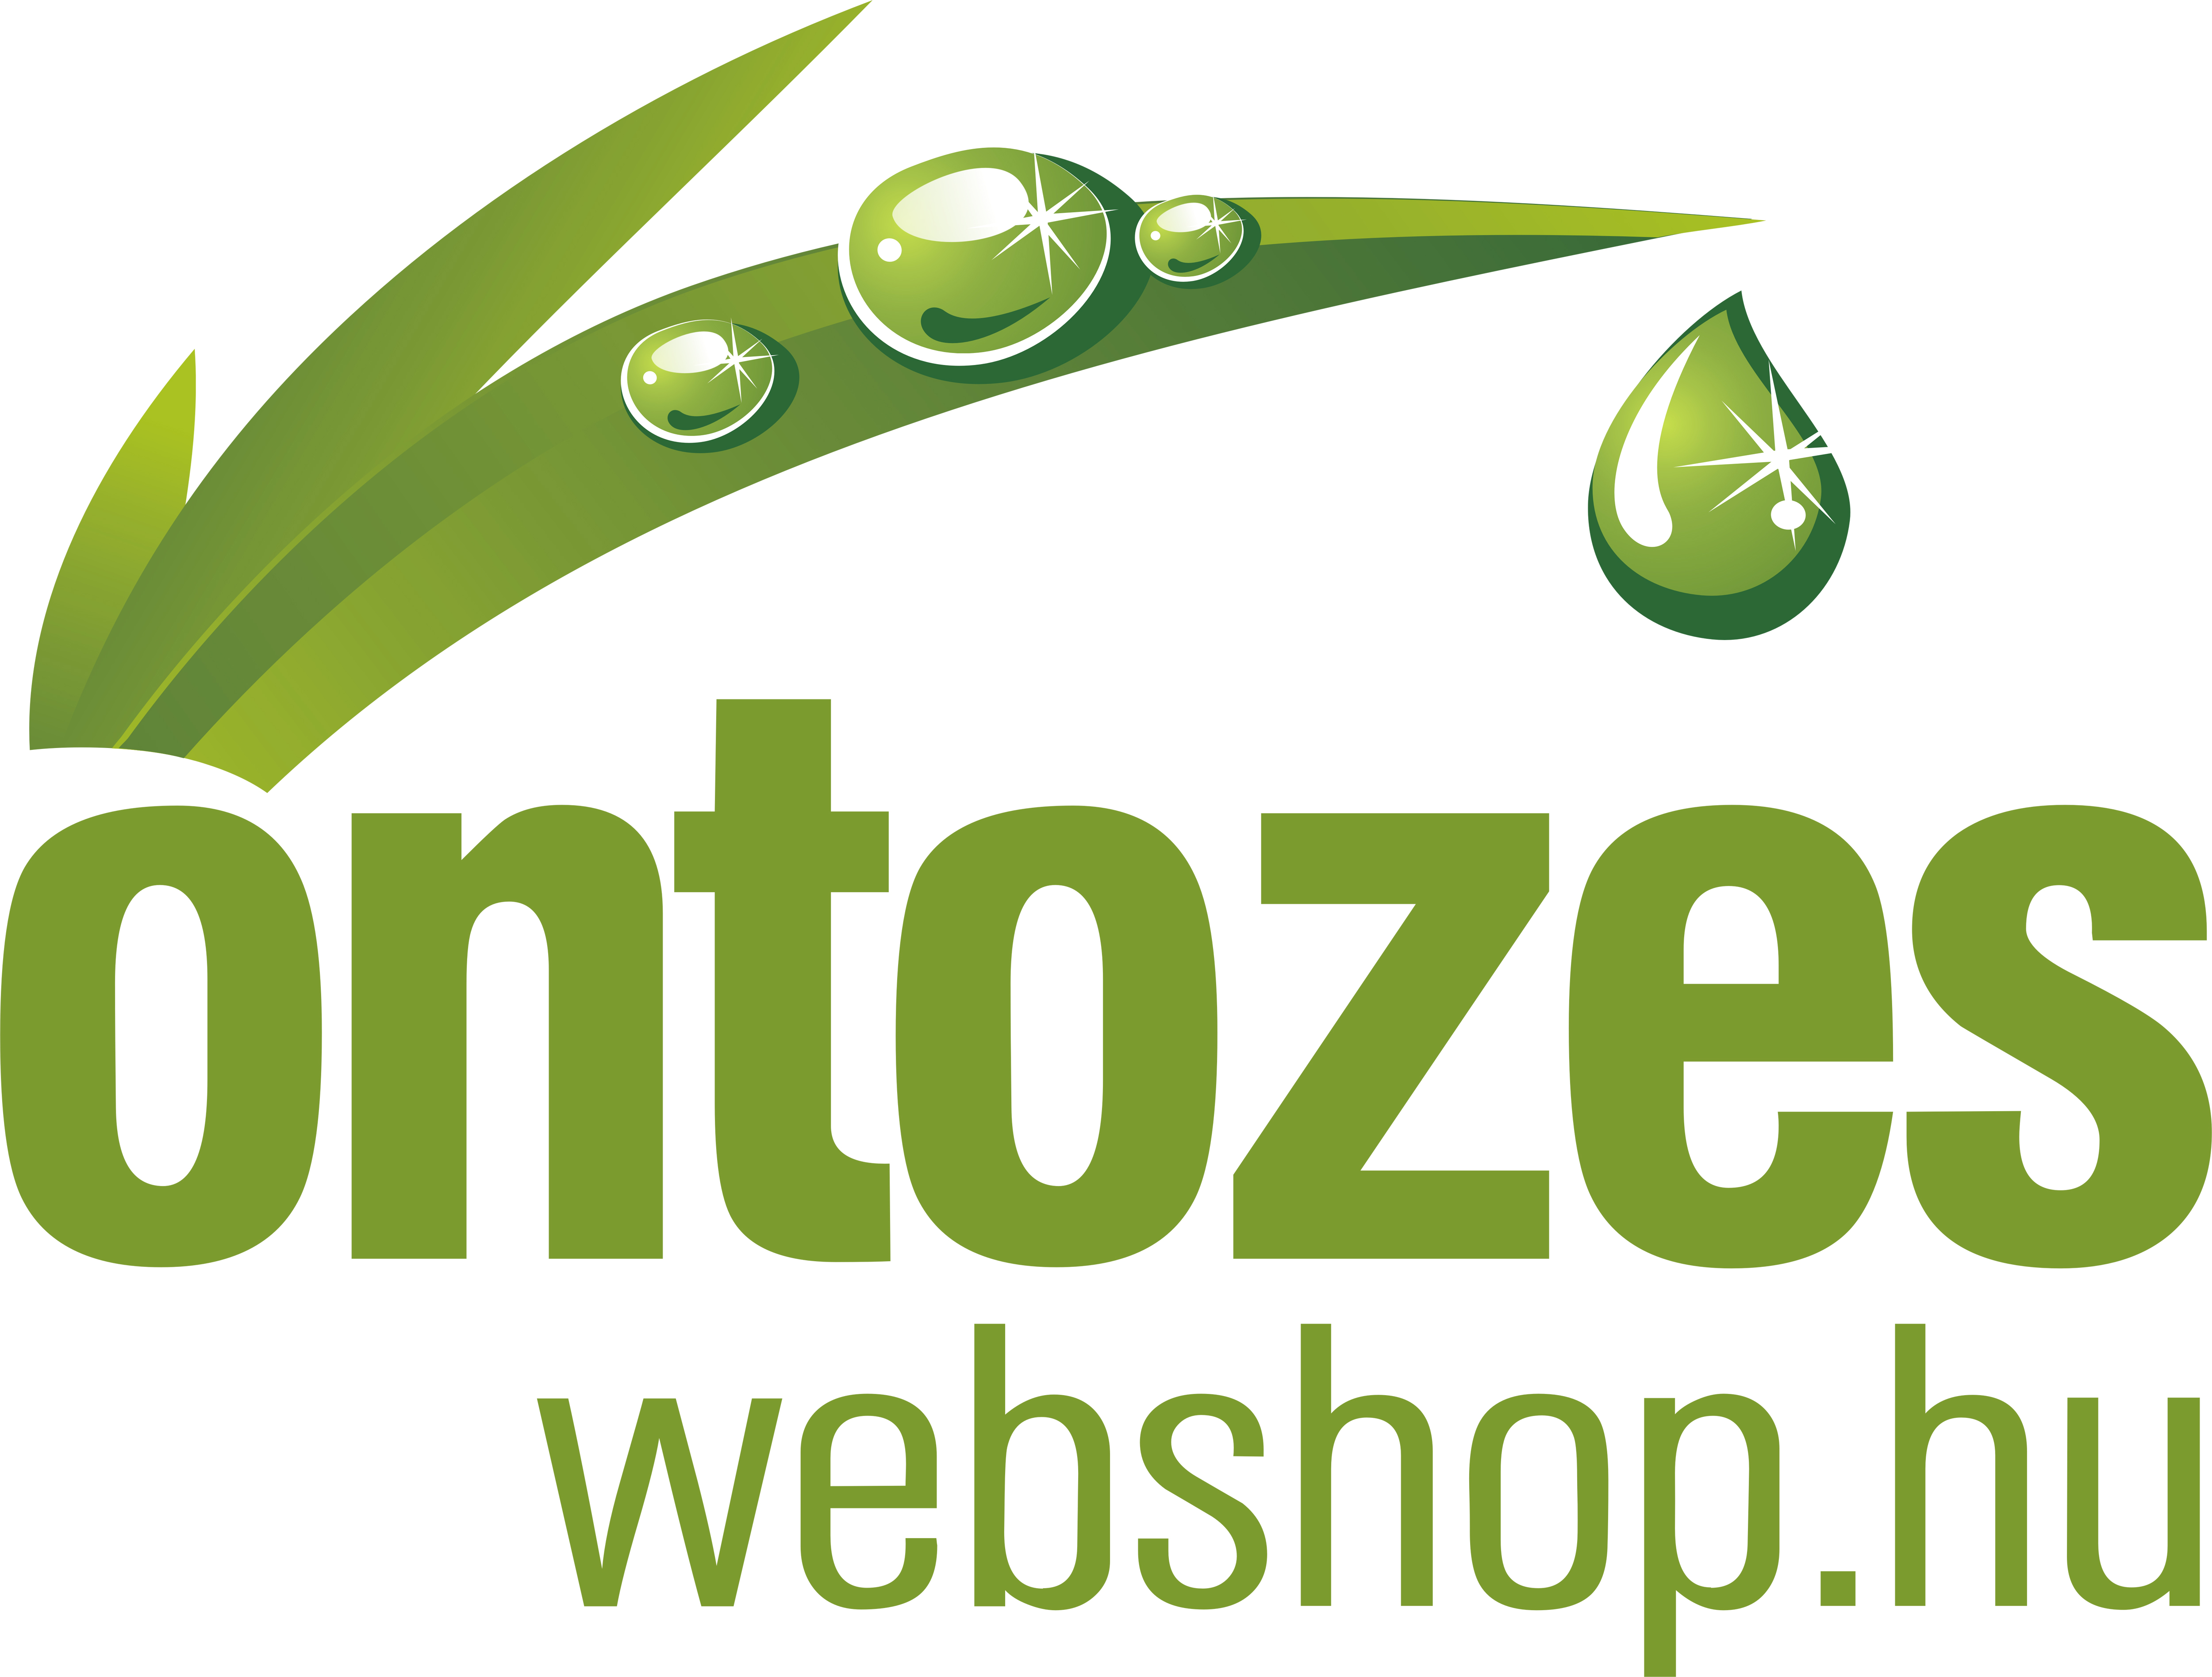 ontozeswebshop_logo.jpg - 2.13 MB